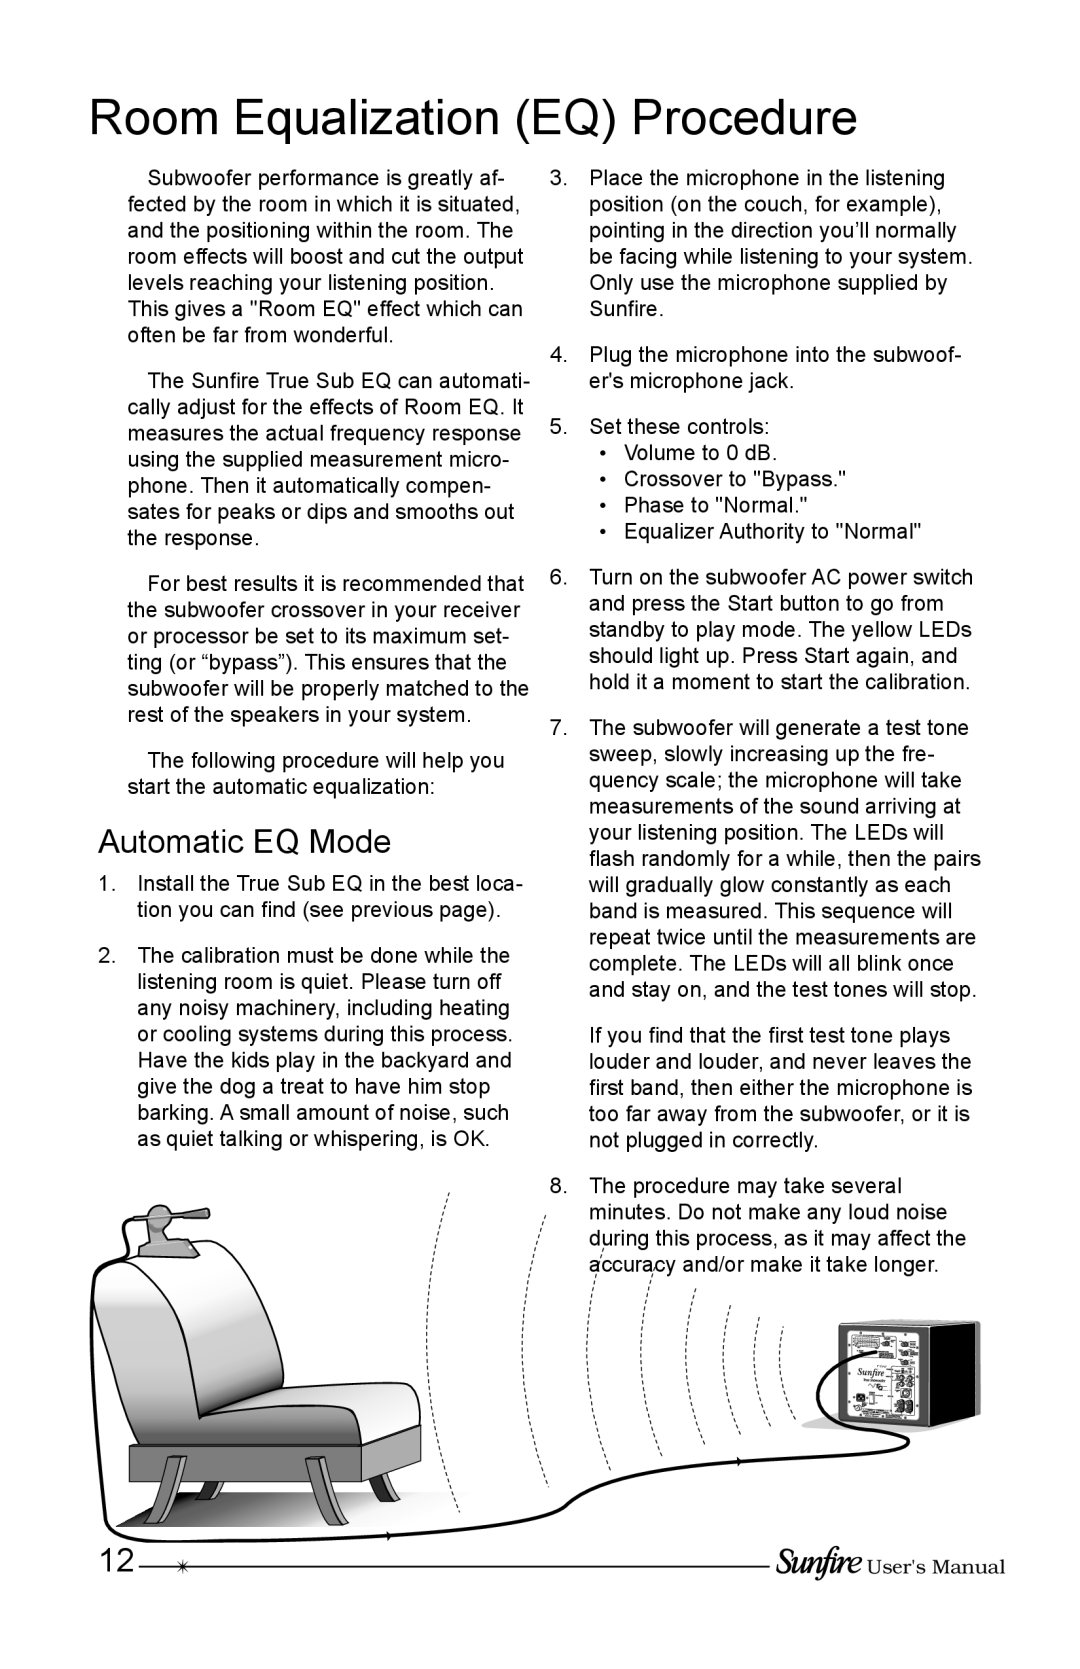 Sunfire Solitaire 10 user manual Room Equalization EQ Procedure, Automatic EQ Mode 